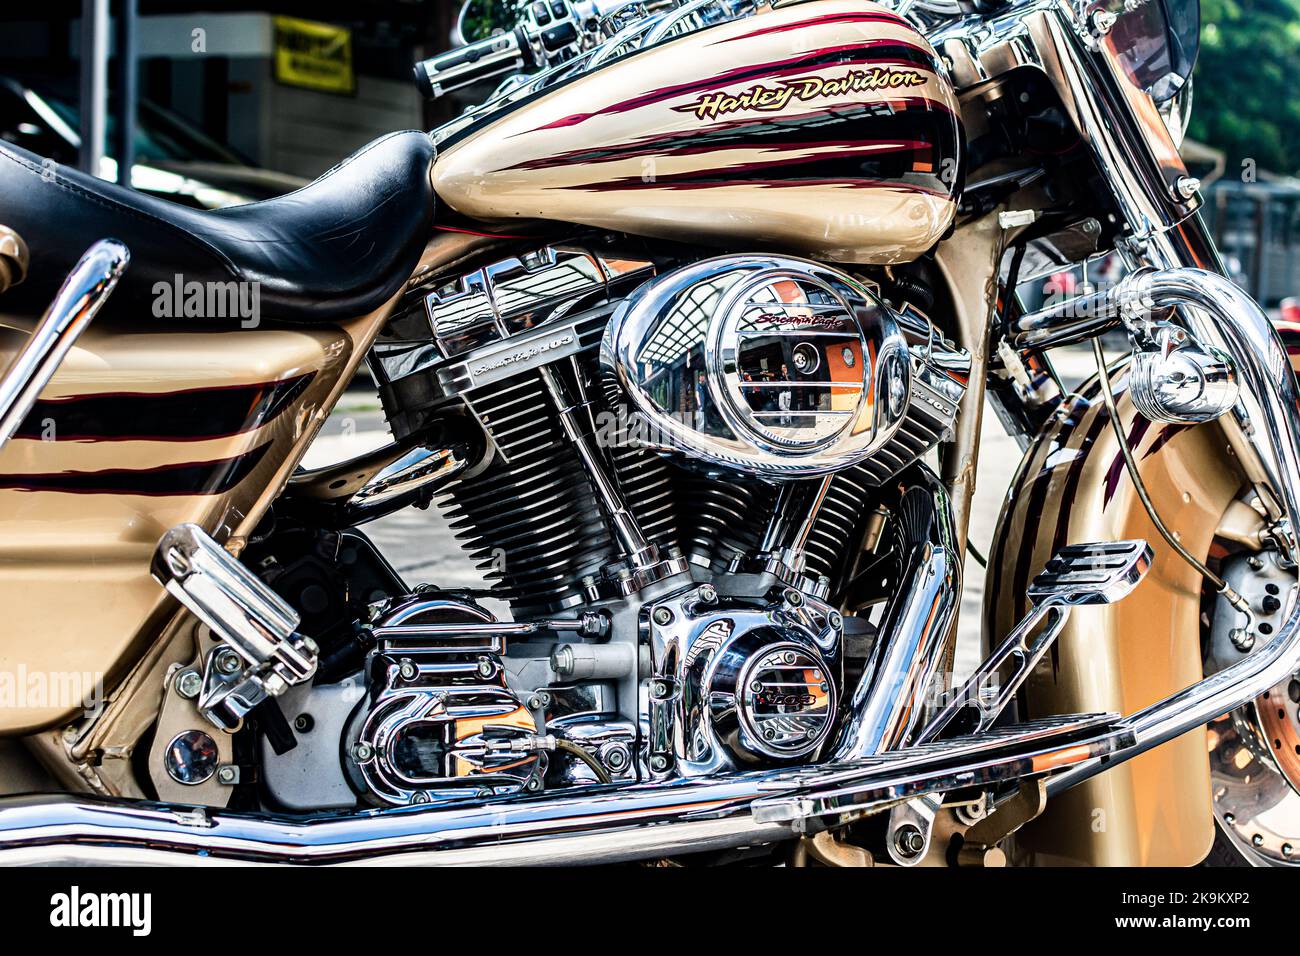 Harley Davidson Motorcycle Stock Photo - Alamy